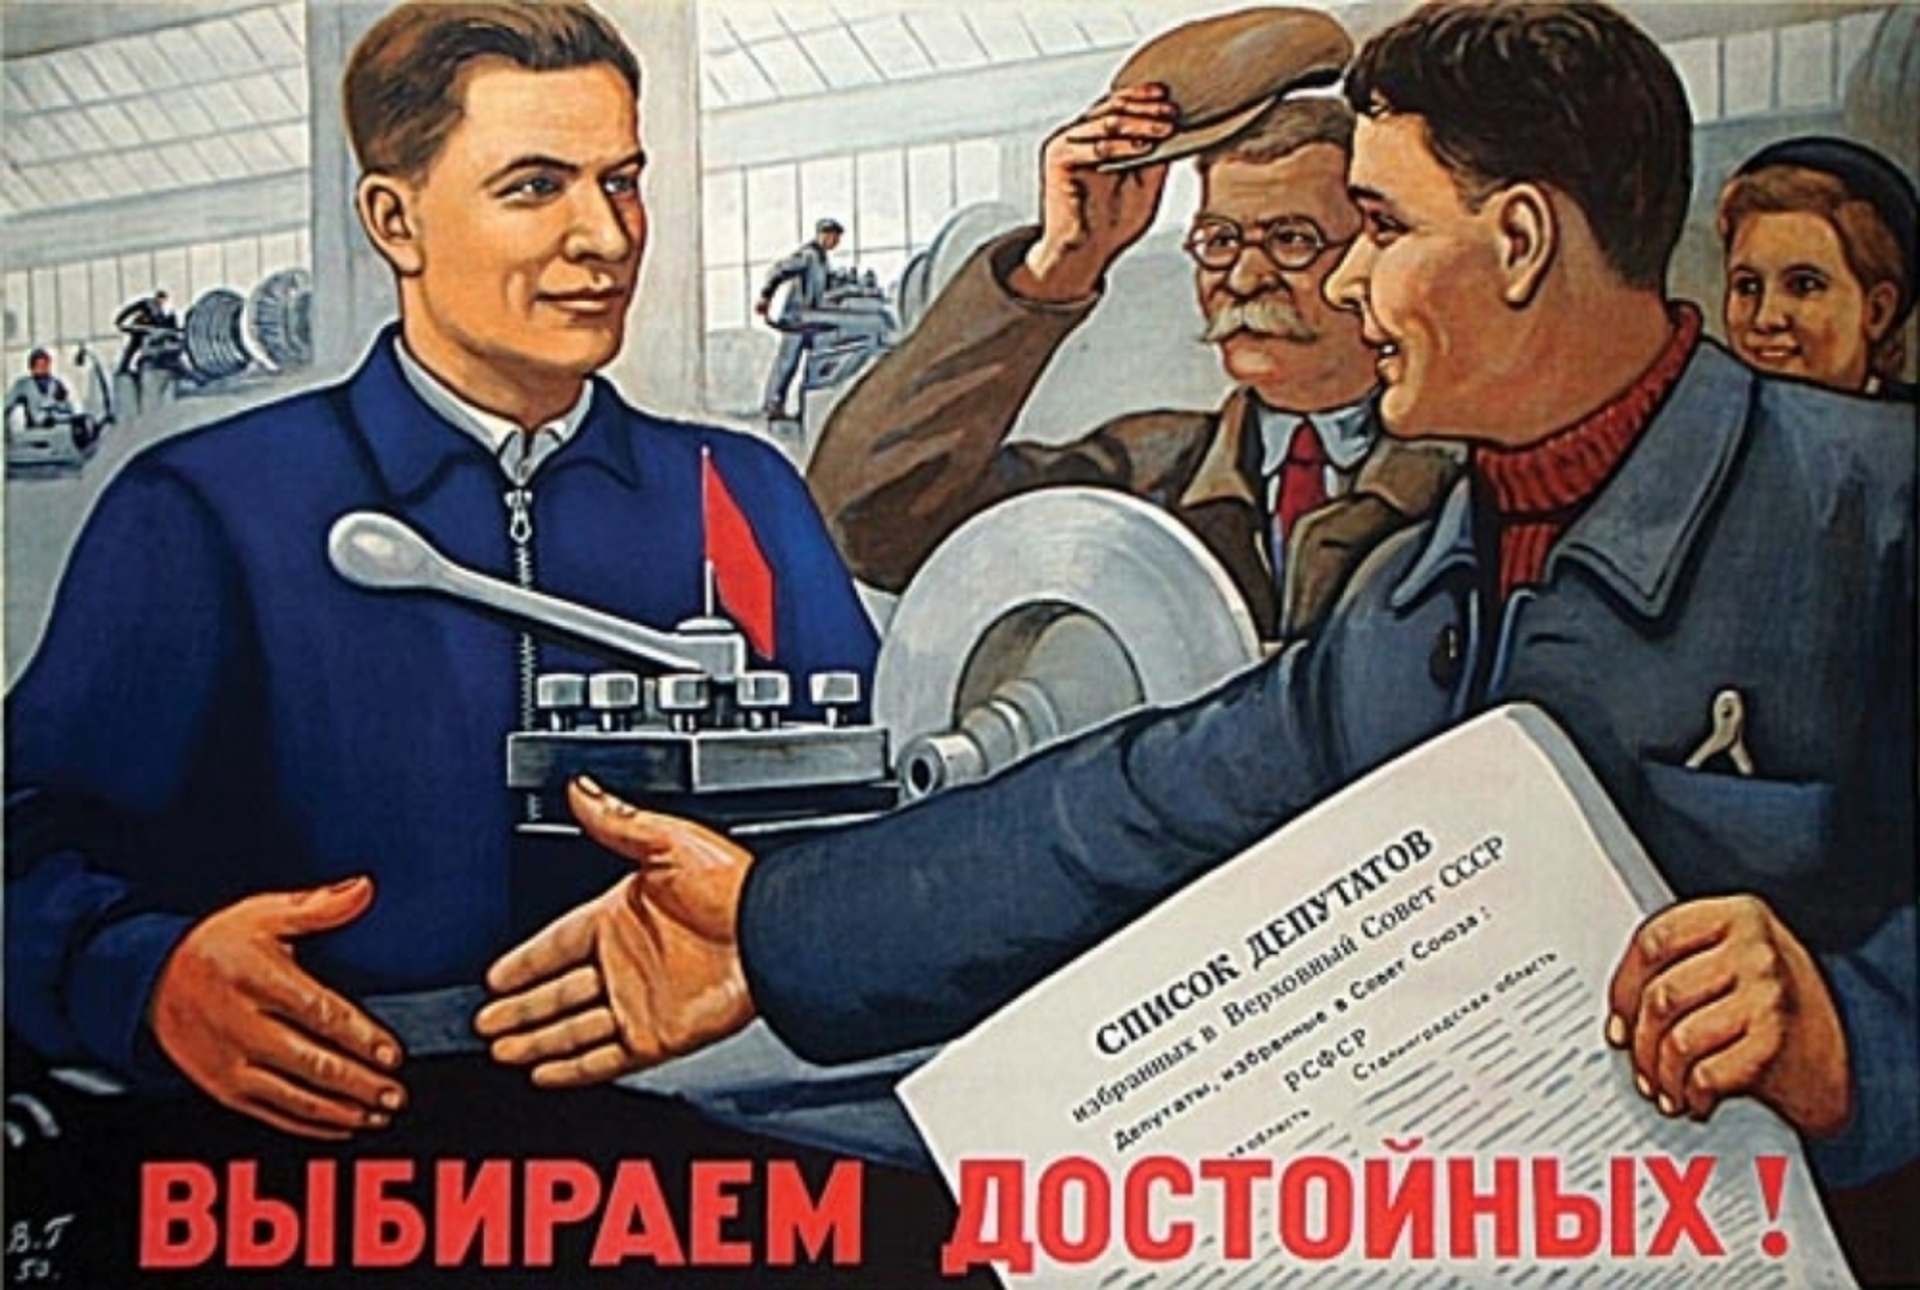 Правая агитация. Советские плакаты. Плакат депутата. Советские предвыборные плакаты. Плакат выберем достойных.